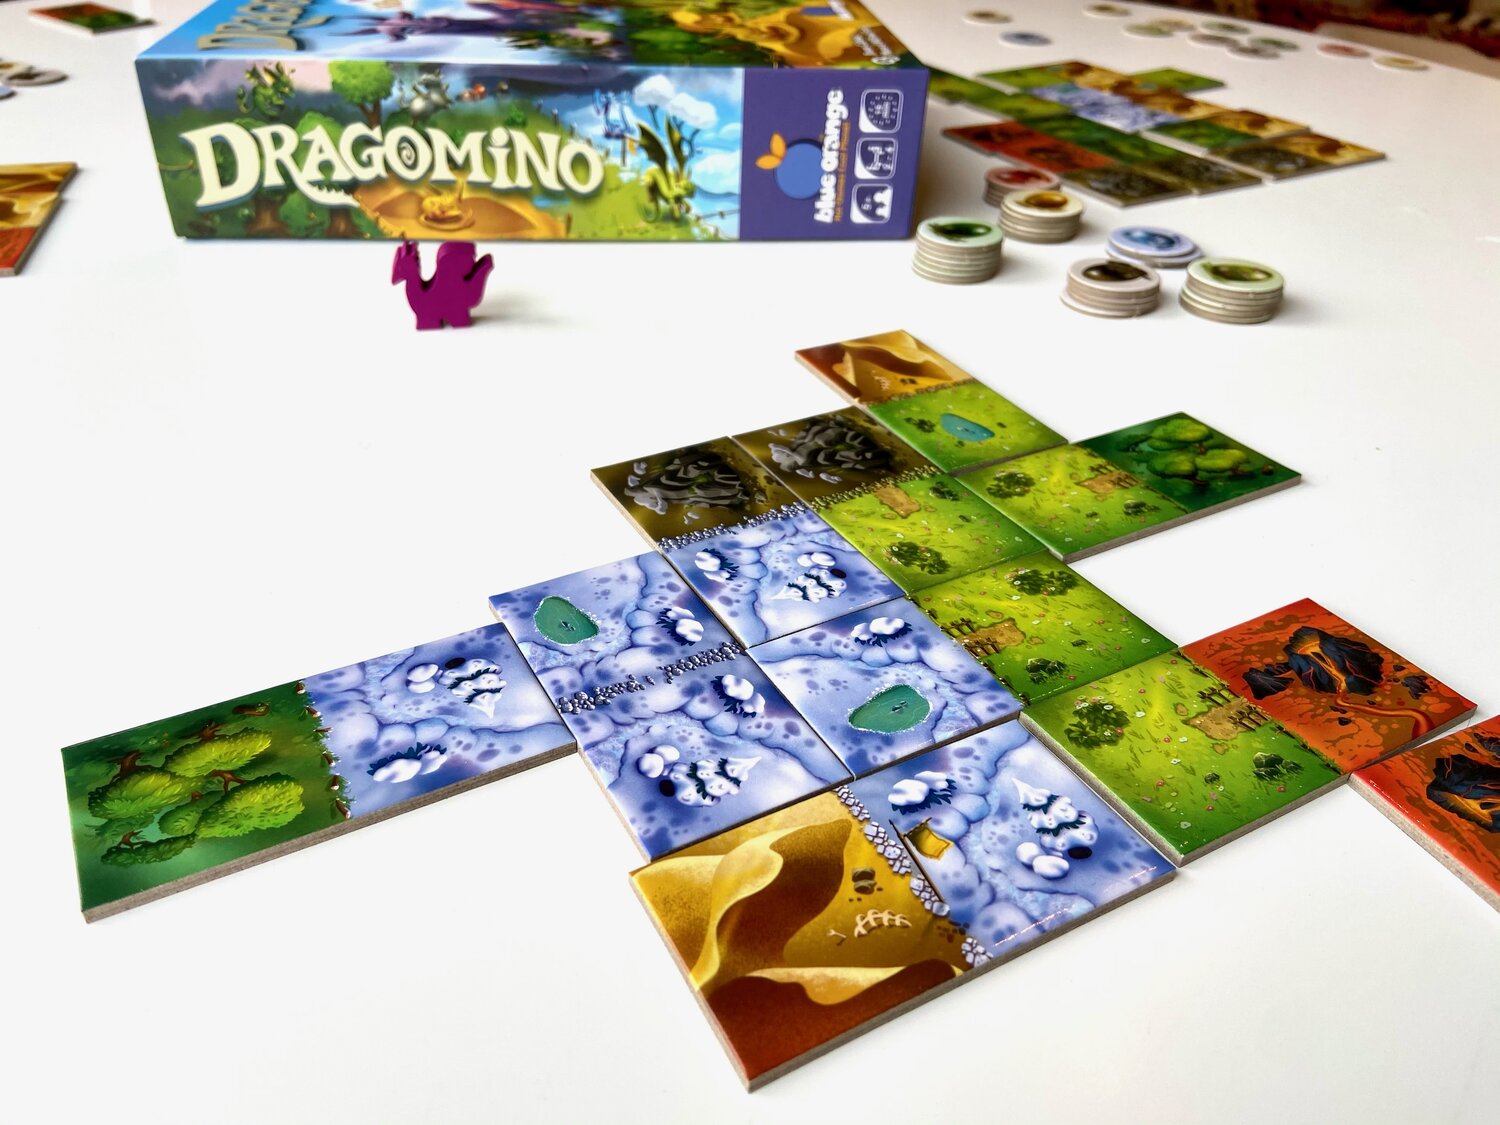 Dragomino My First Kingdomino Board Game Blue Orange Kids Dragon